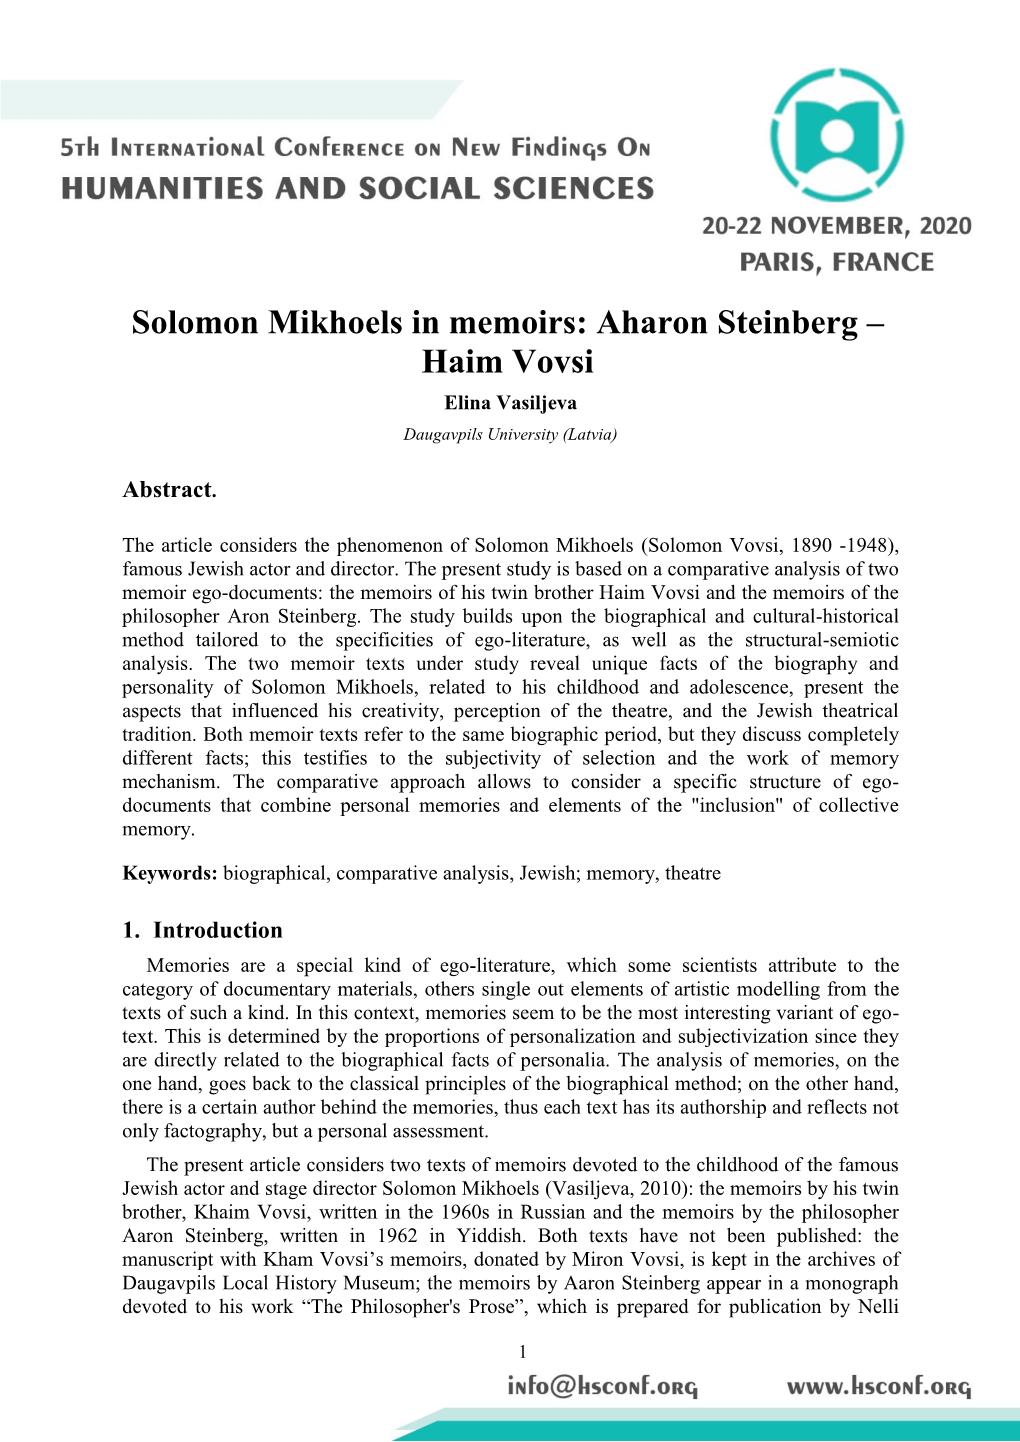 Solomon Mikhoels in Memoirs: Aharon Steinberg – Haim Vovsi Elina Vasiljeva Daugavpils University (Latvia)